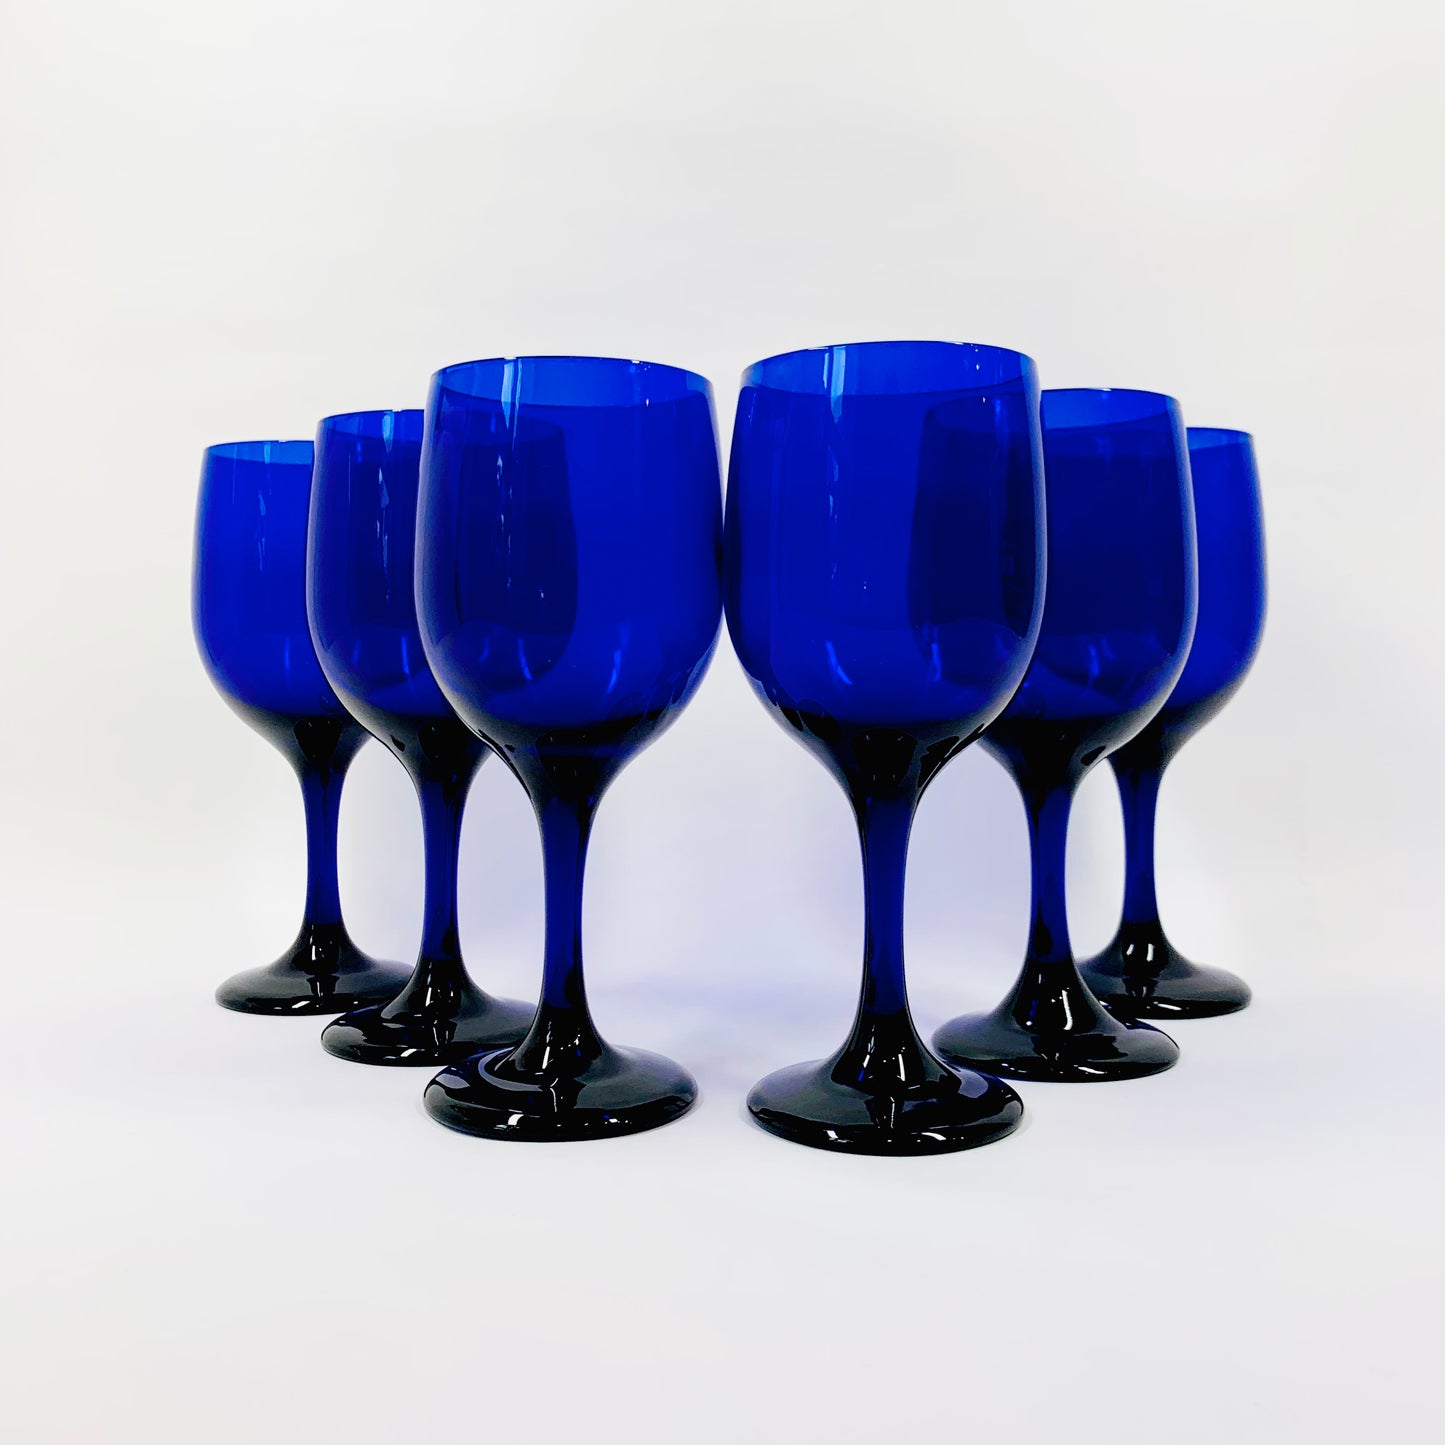 BLUE LIBBEY WINE GLASSES